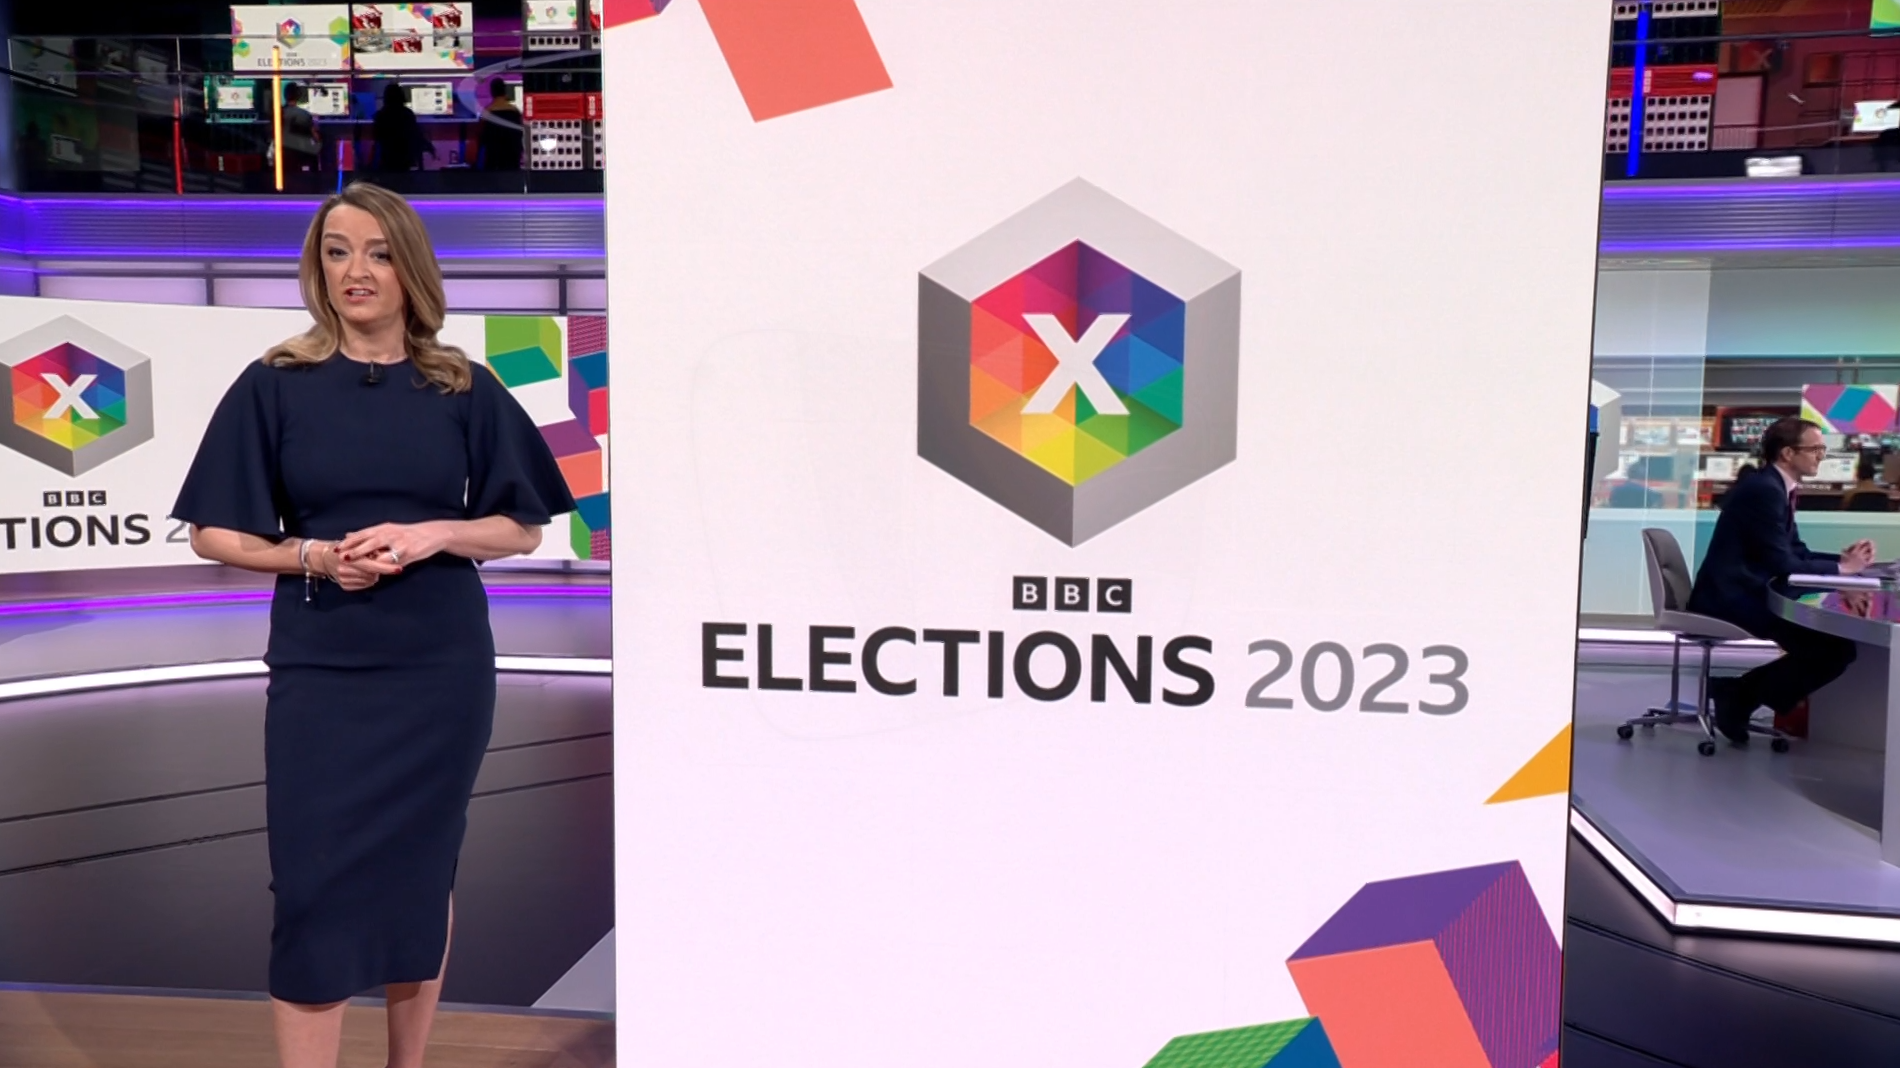 BBC Election 2023 presentation Clean Feed